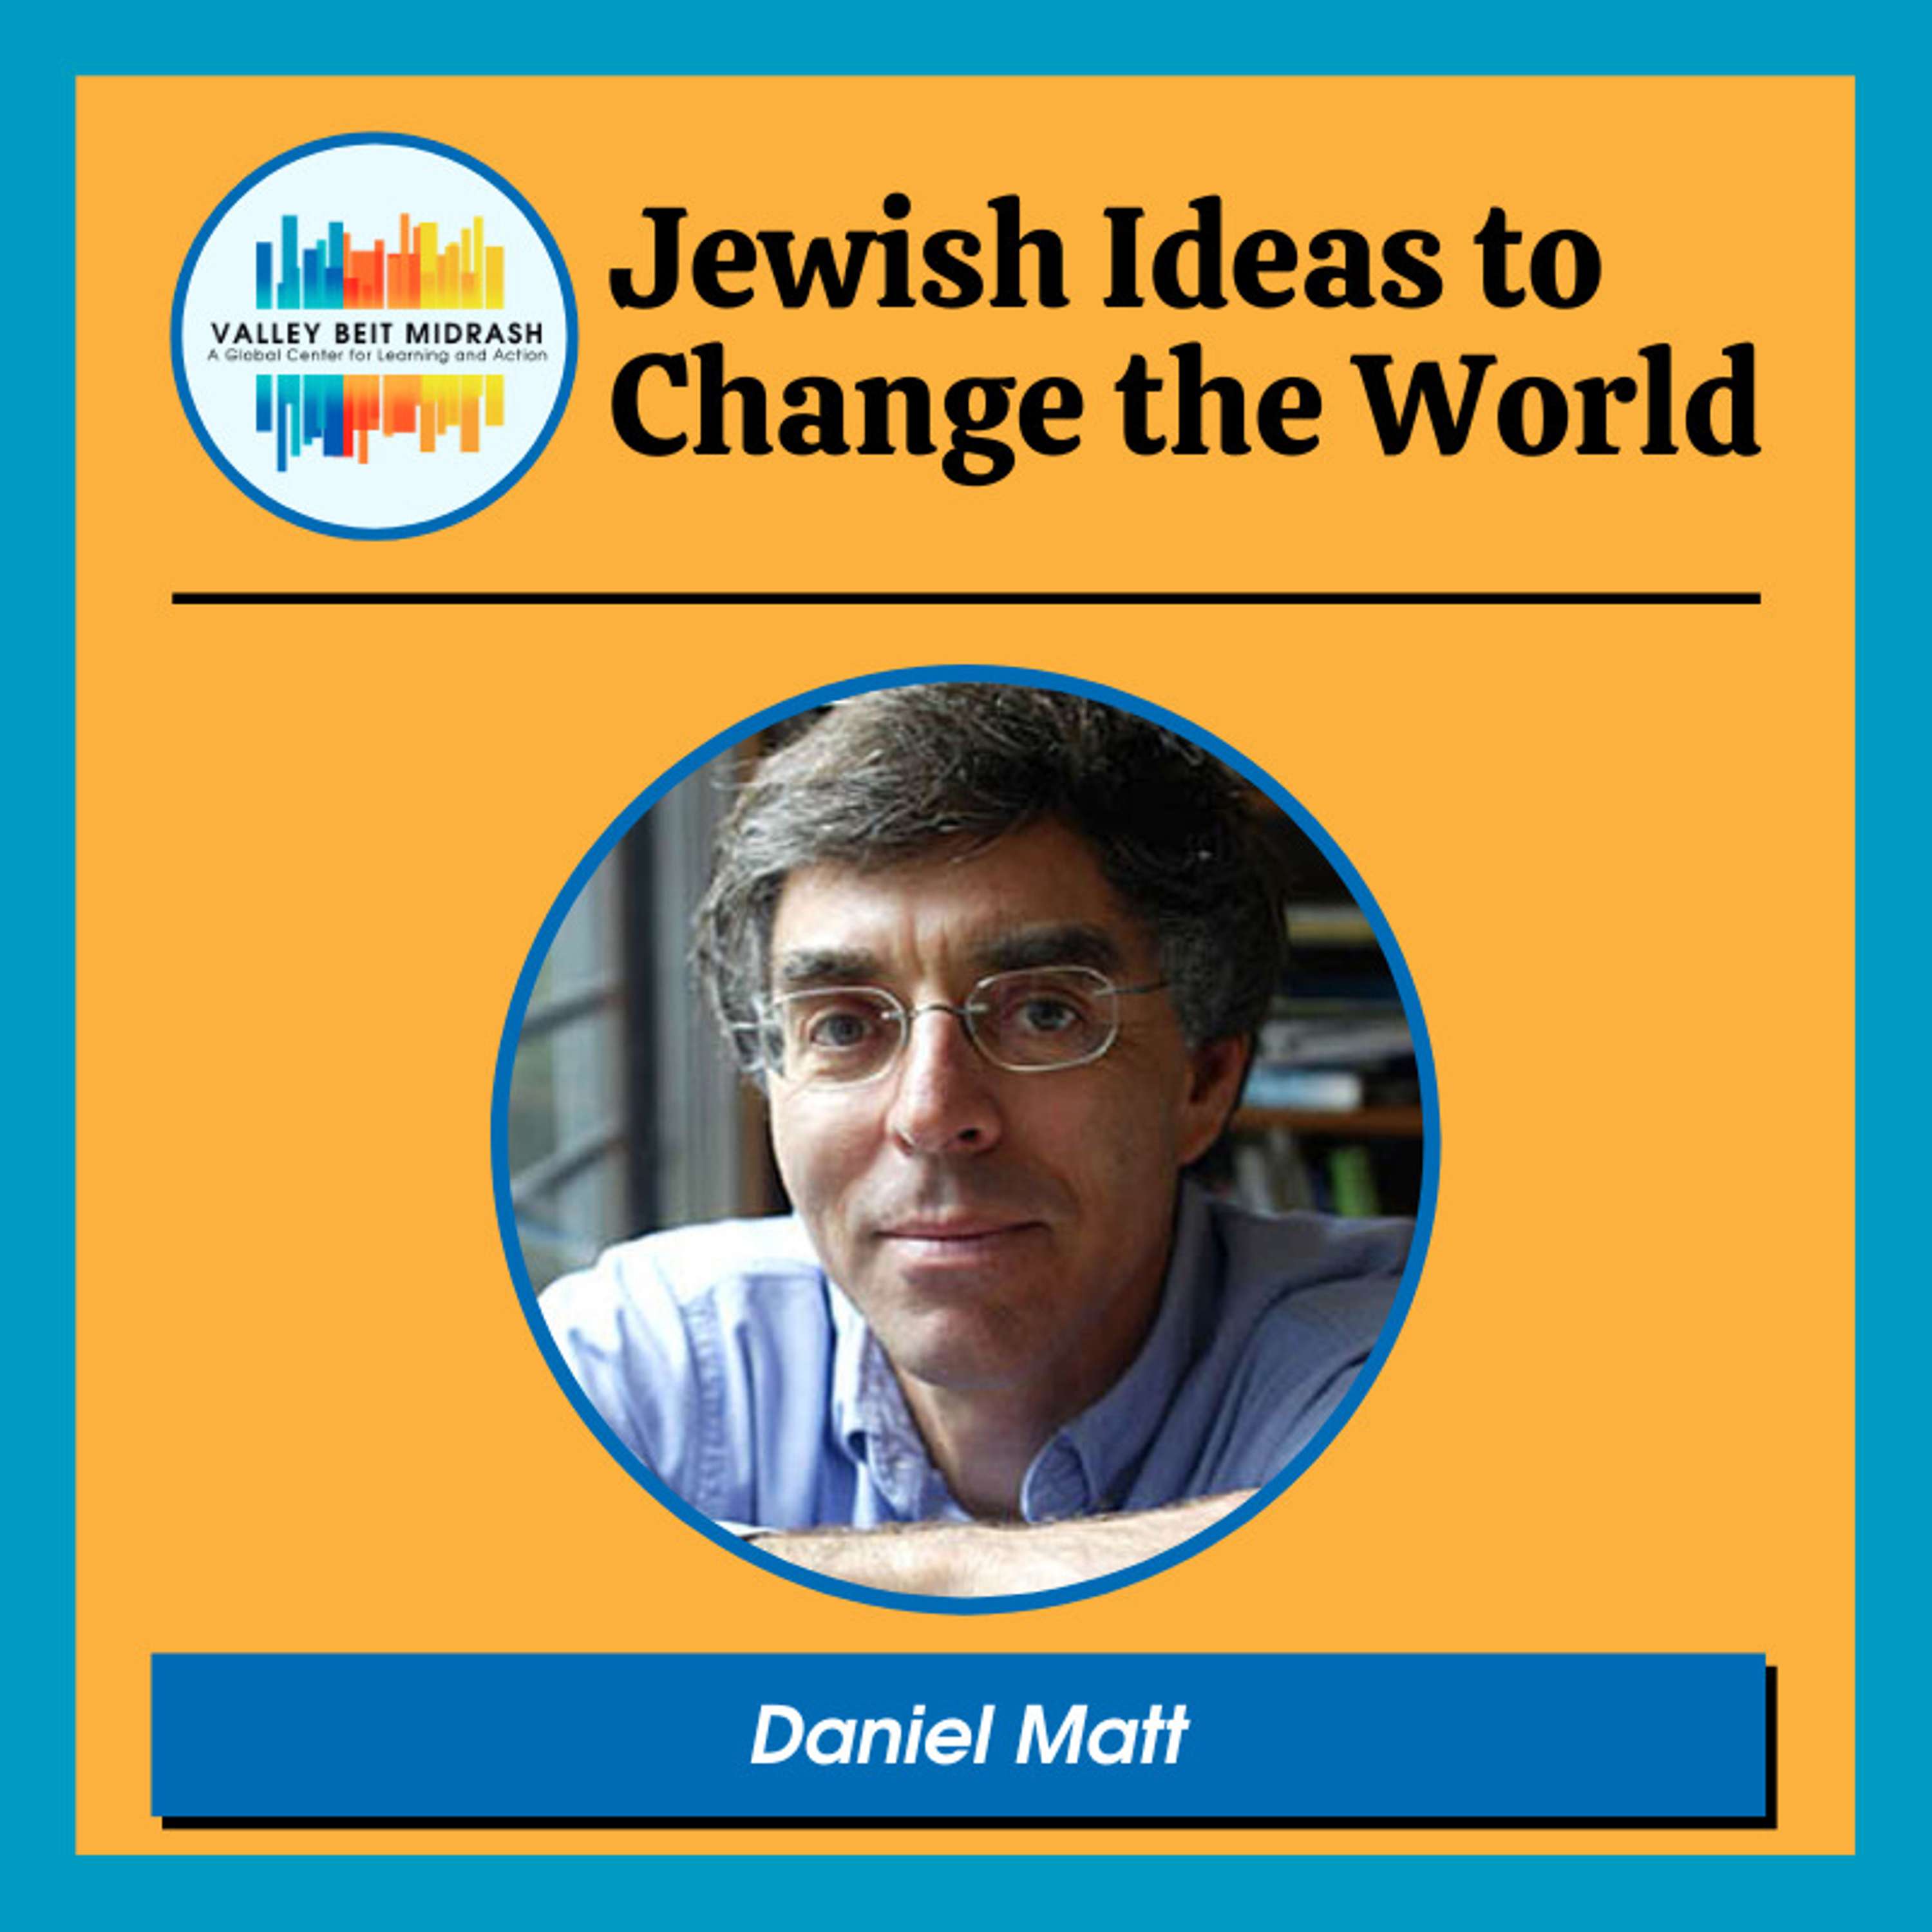 Becoming Elijah: Daniel Matt Interviewed by Rabbi Shmuly Yanklowitz